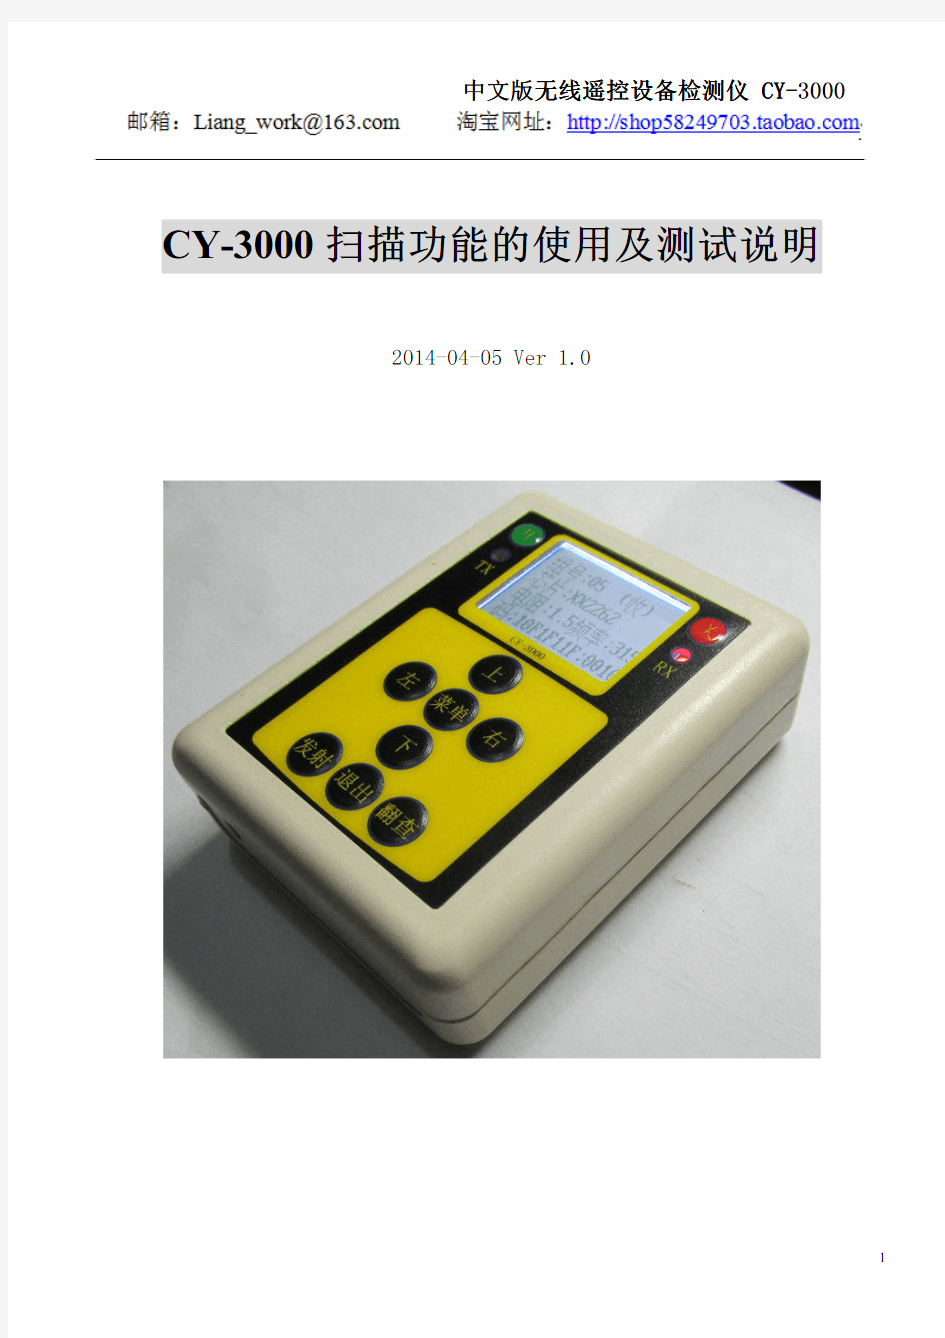 CY-3000扫描功能的使用及测试说明((Ver 1.0 04-05-2014))